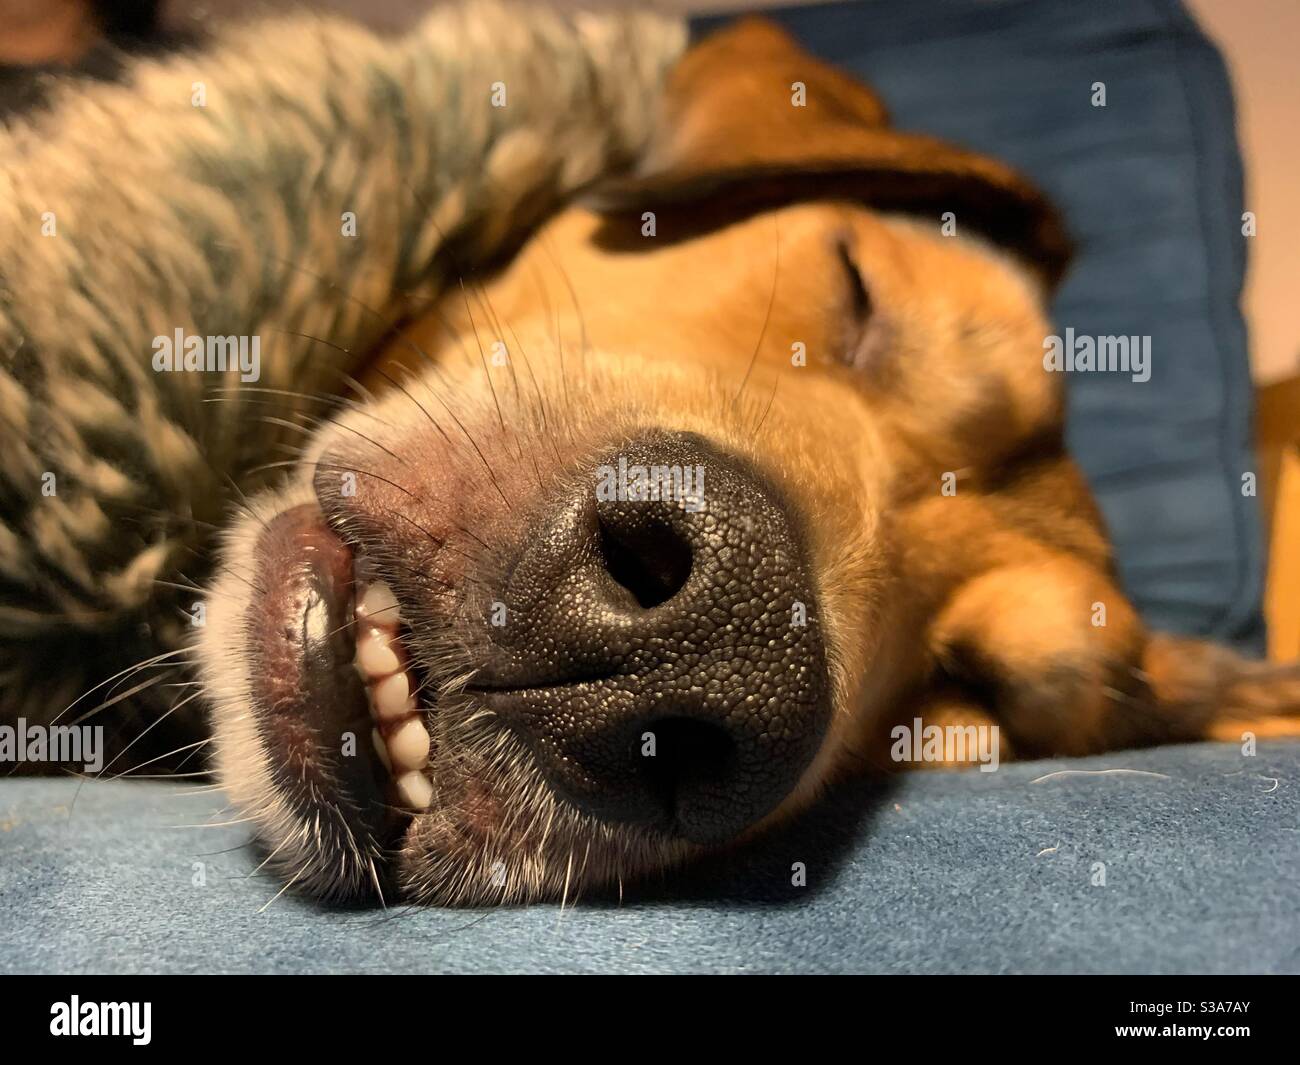 One sleeping brown dog. Stock Photo